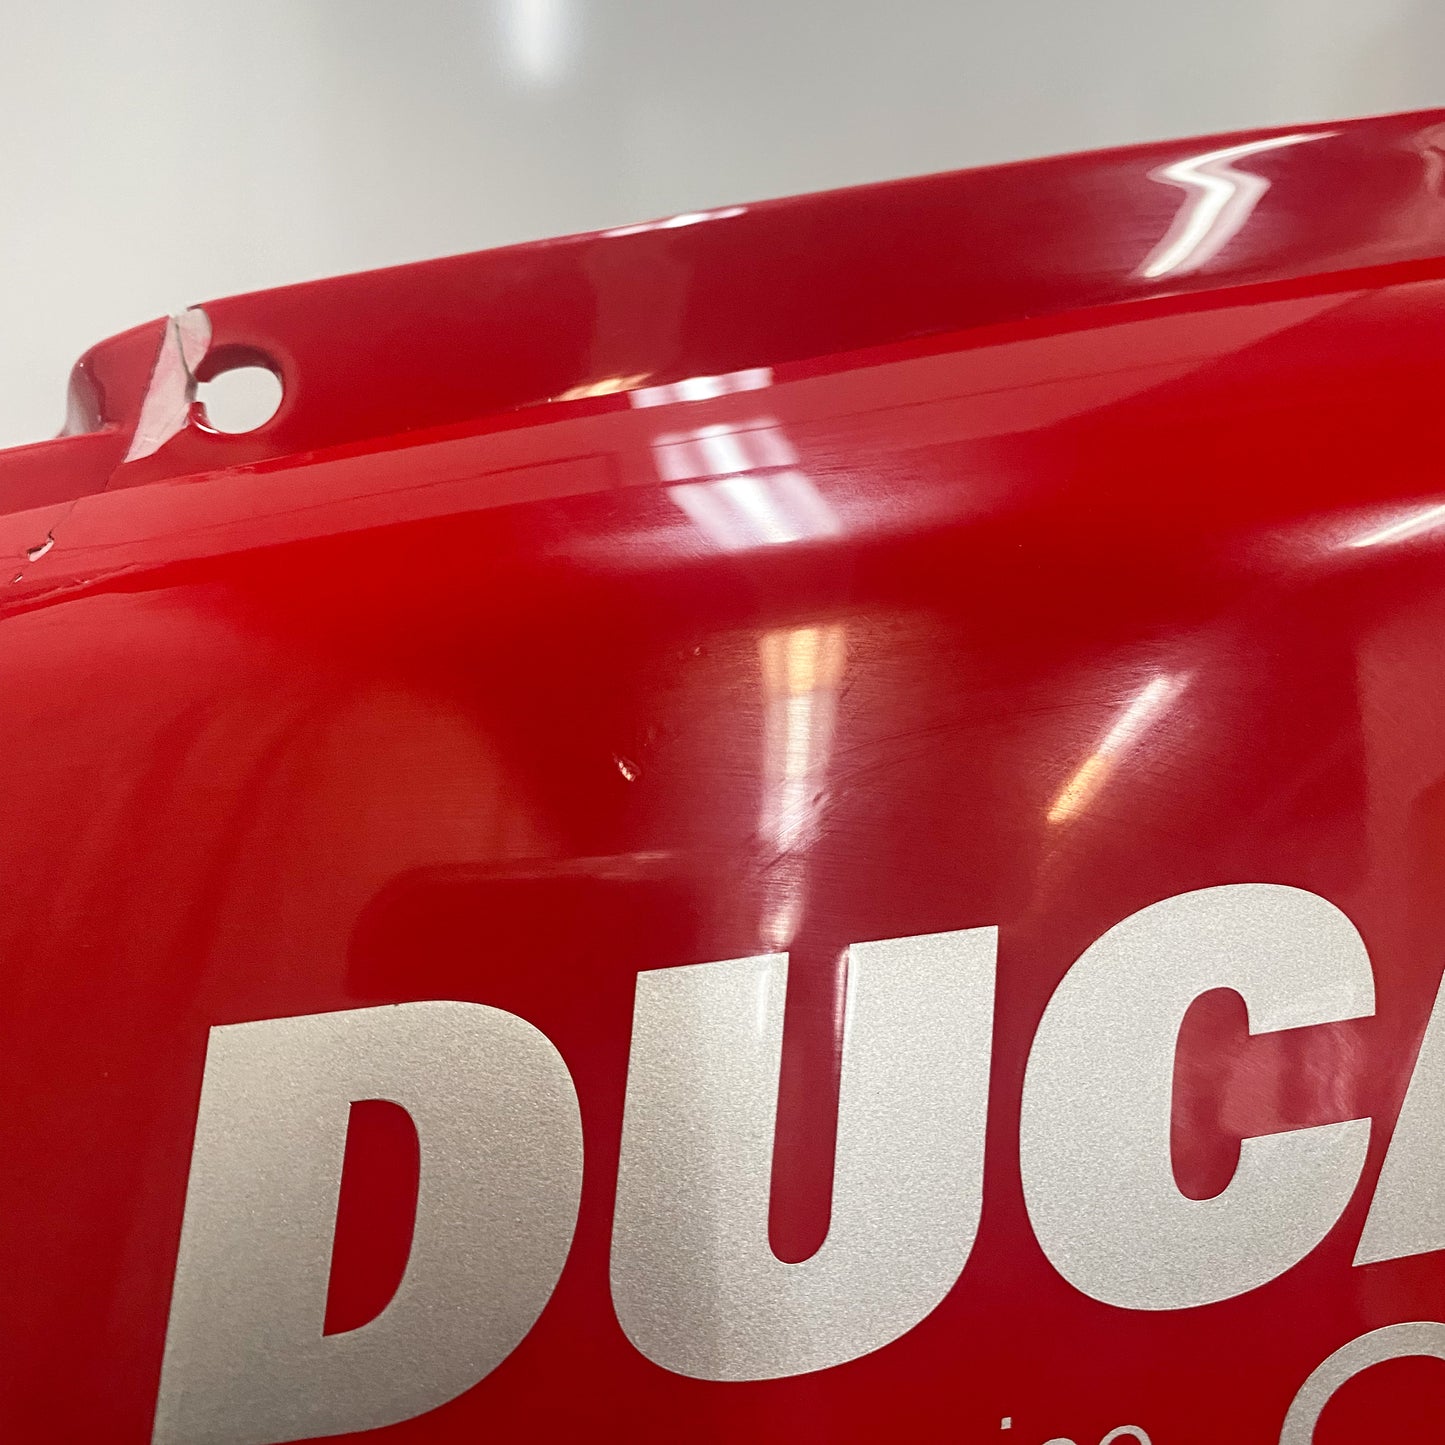 Ducati ST4S Right Upper Half Fairing Red 48011931BA USED